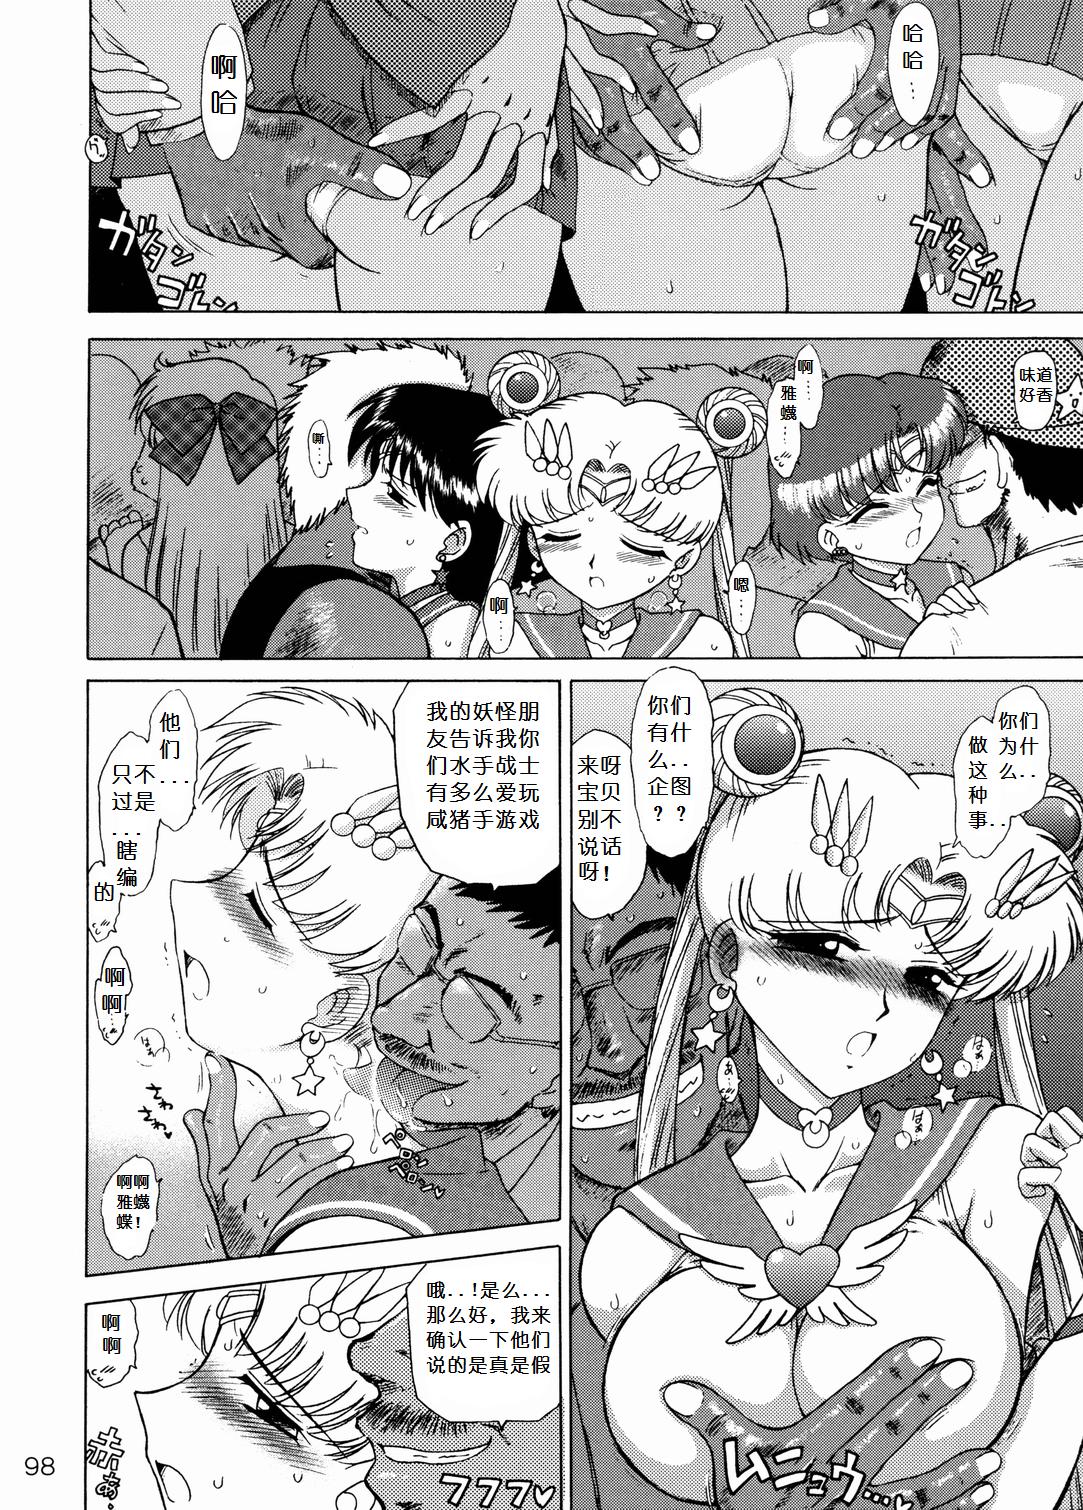 Camgirl The Grateful Dead - Sailor moon Solo Female - Page 6